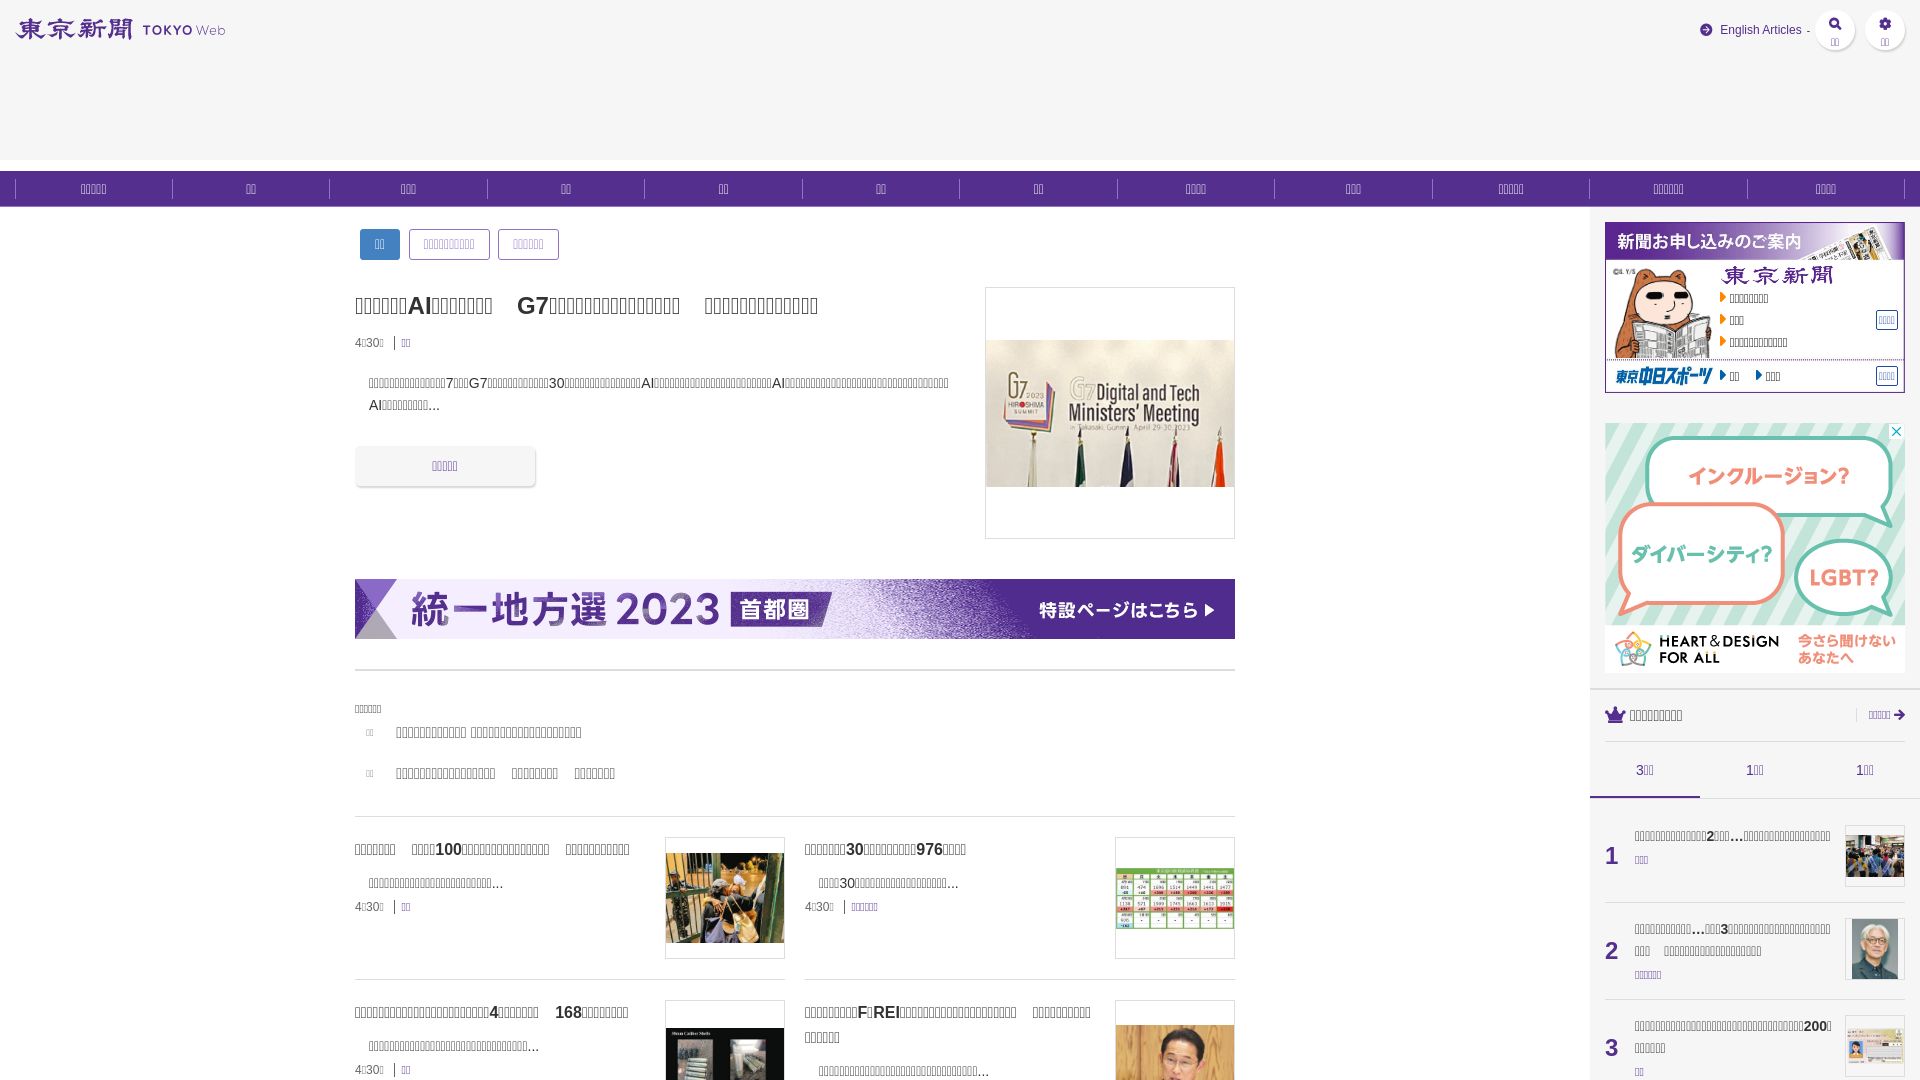 Estado web tokyo-np.co.jp está   ONLINE